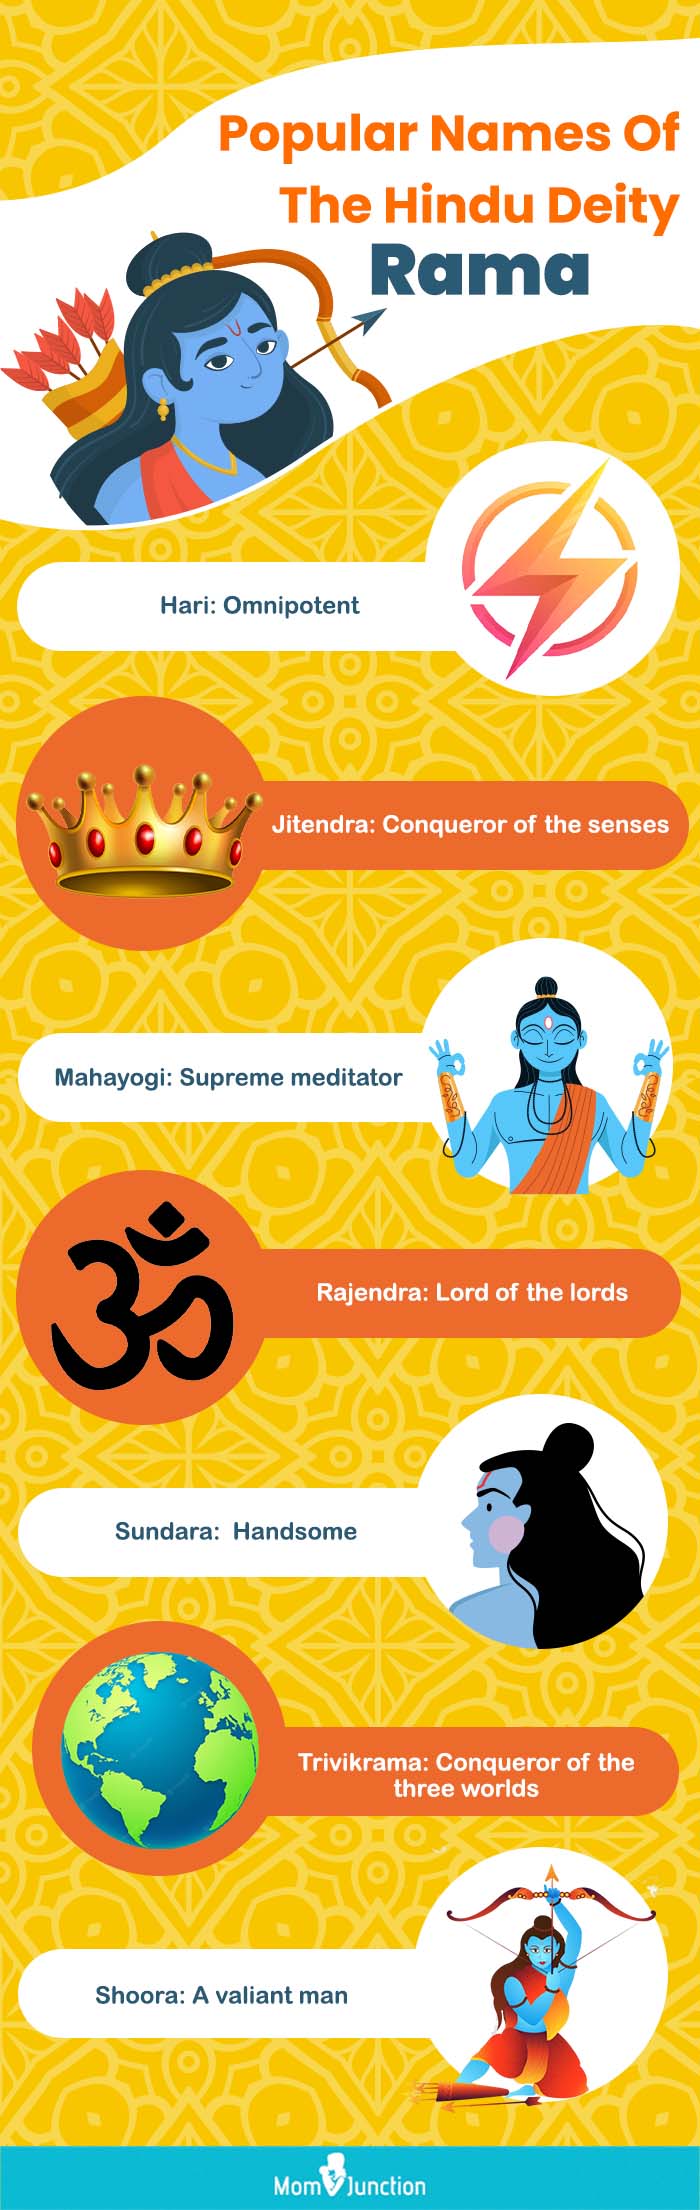 popular names of the hindu deity ram (infographic)